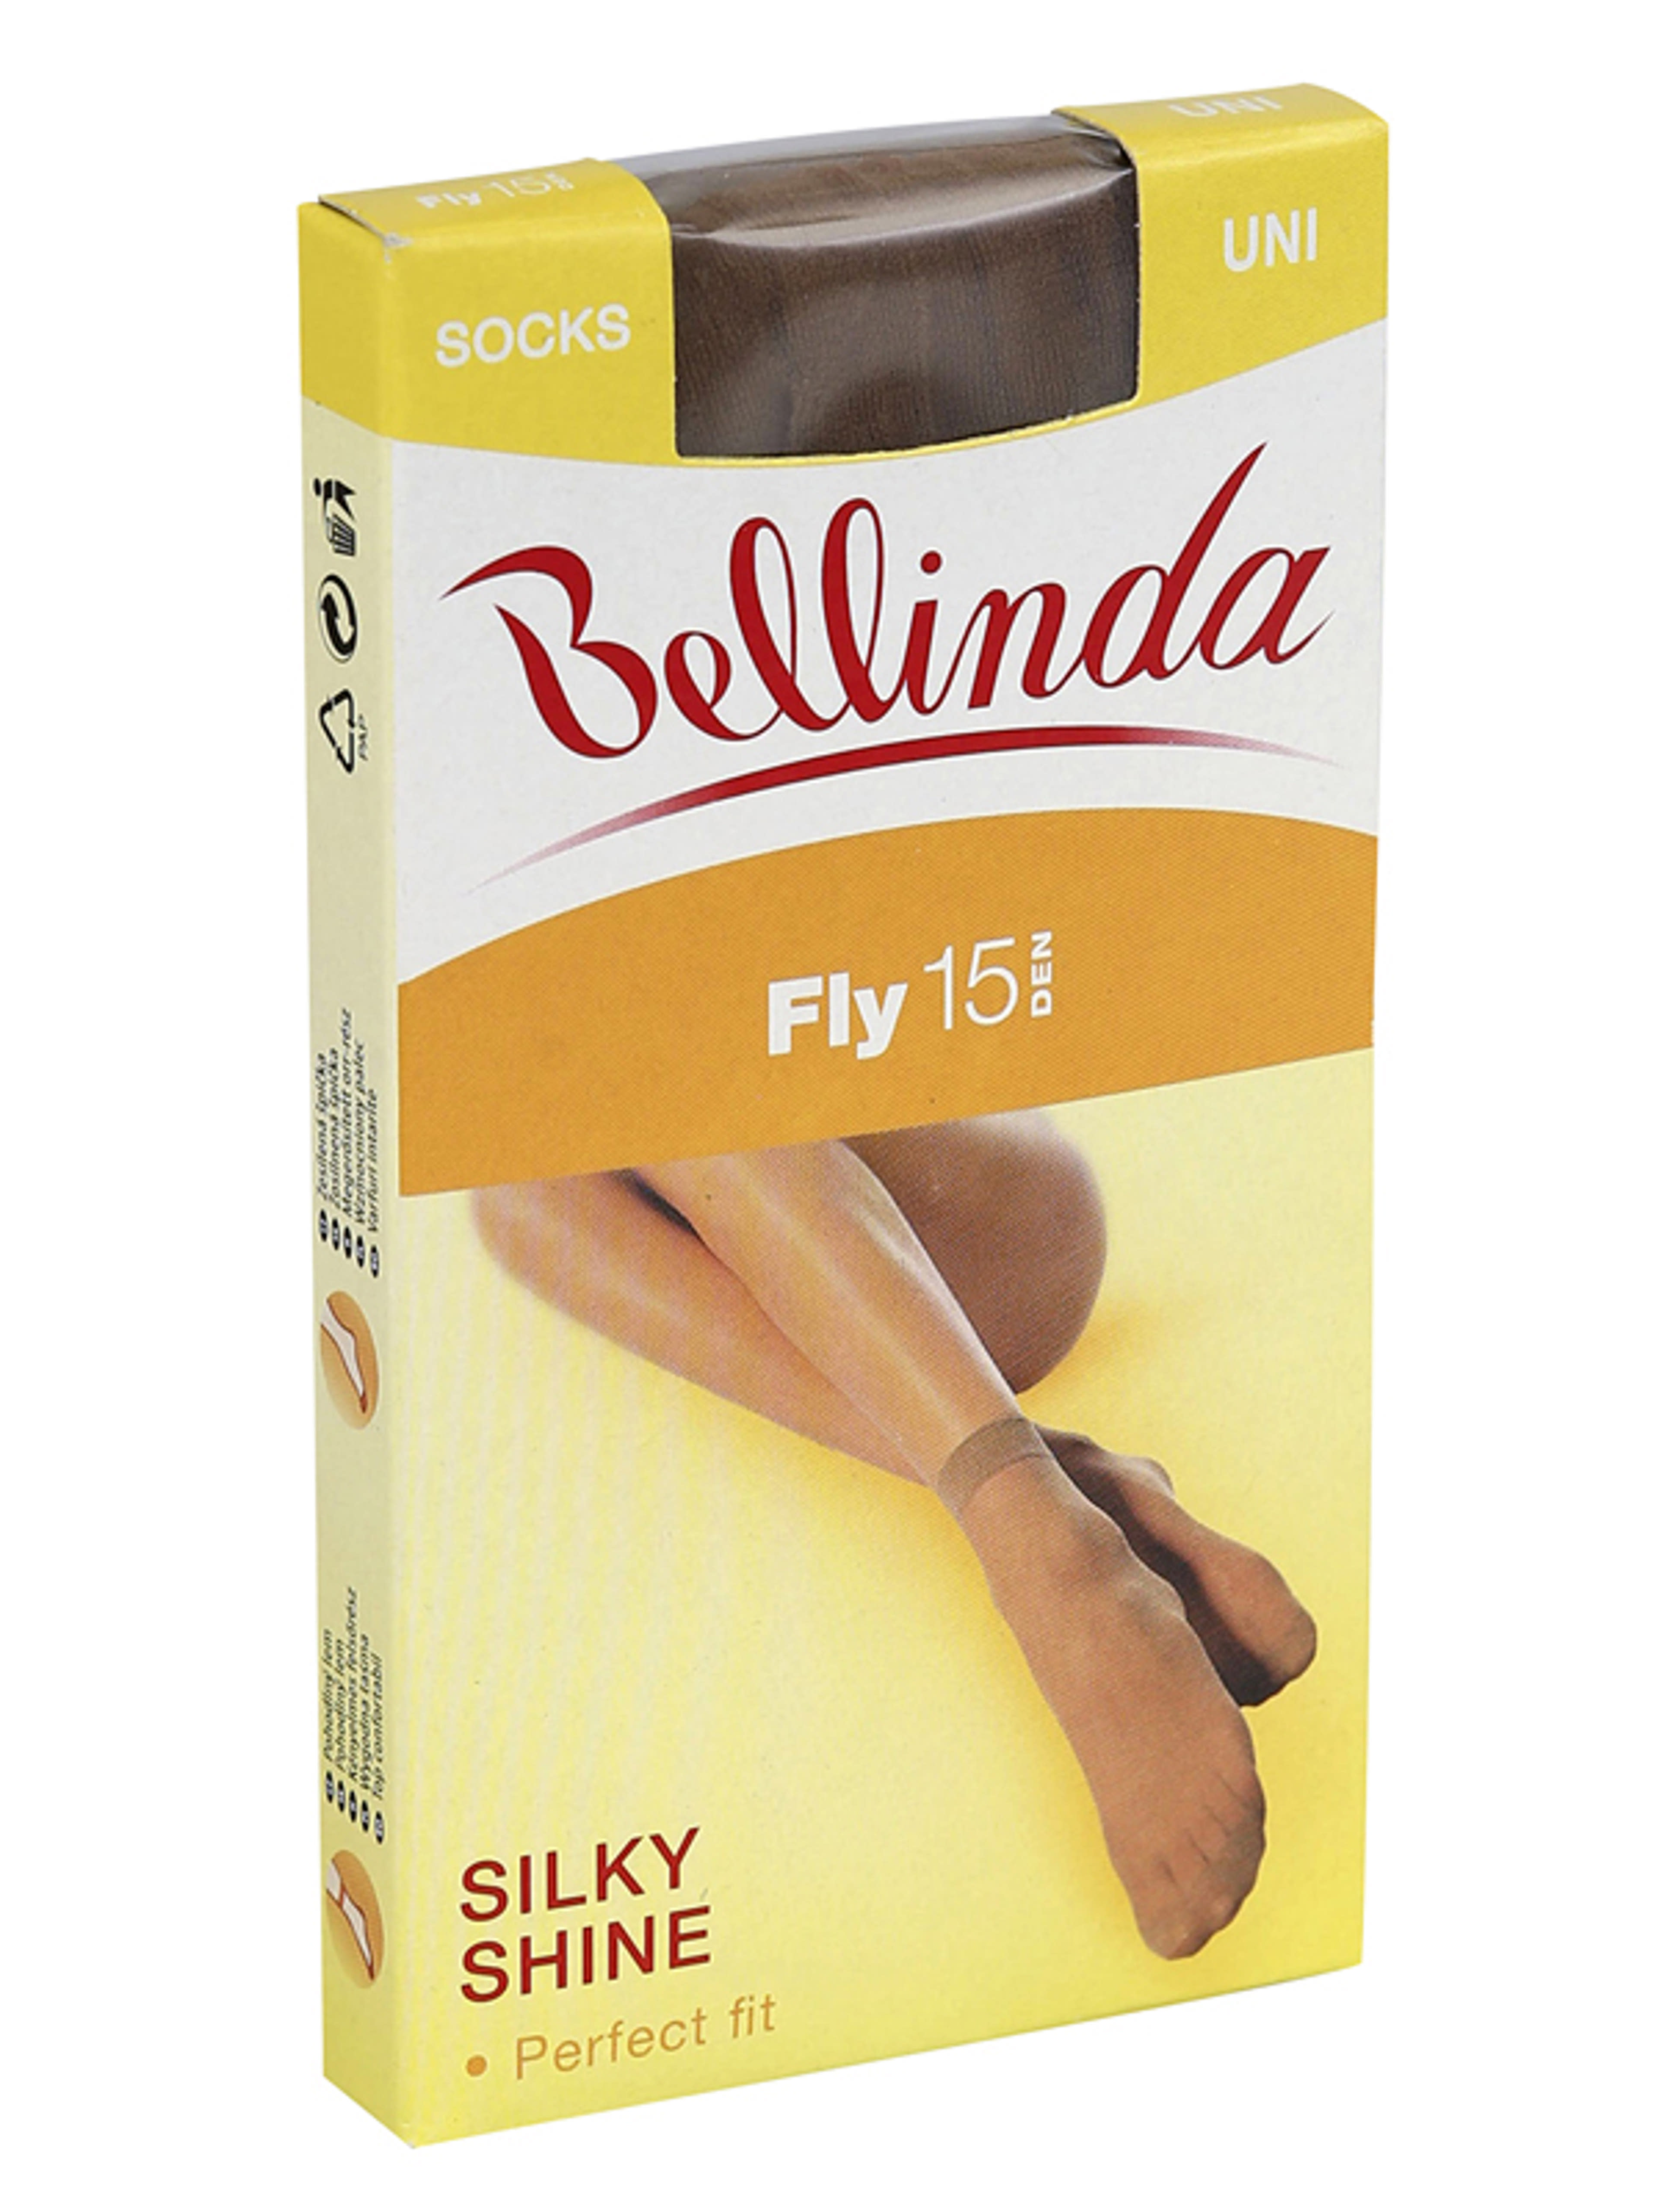 Bellinda Fly 15 Den Bronz Bokafix - 1 db-1